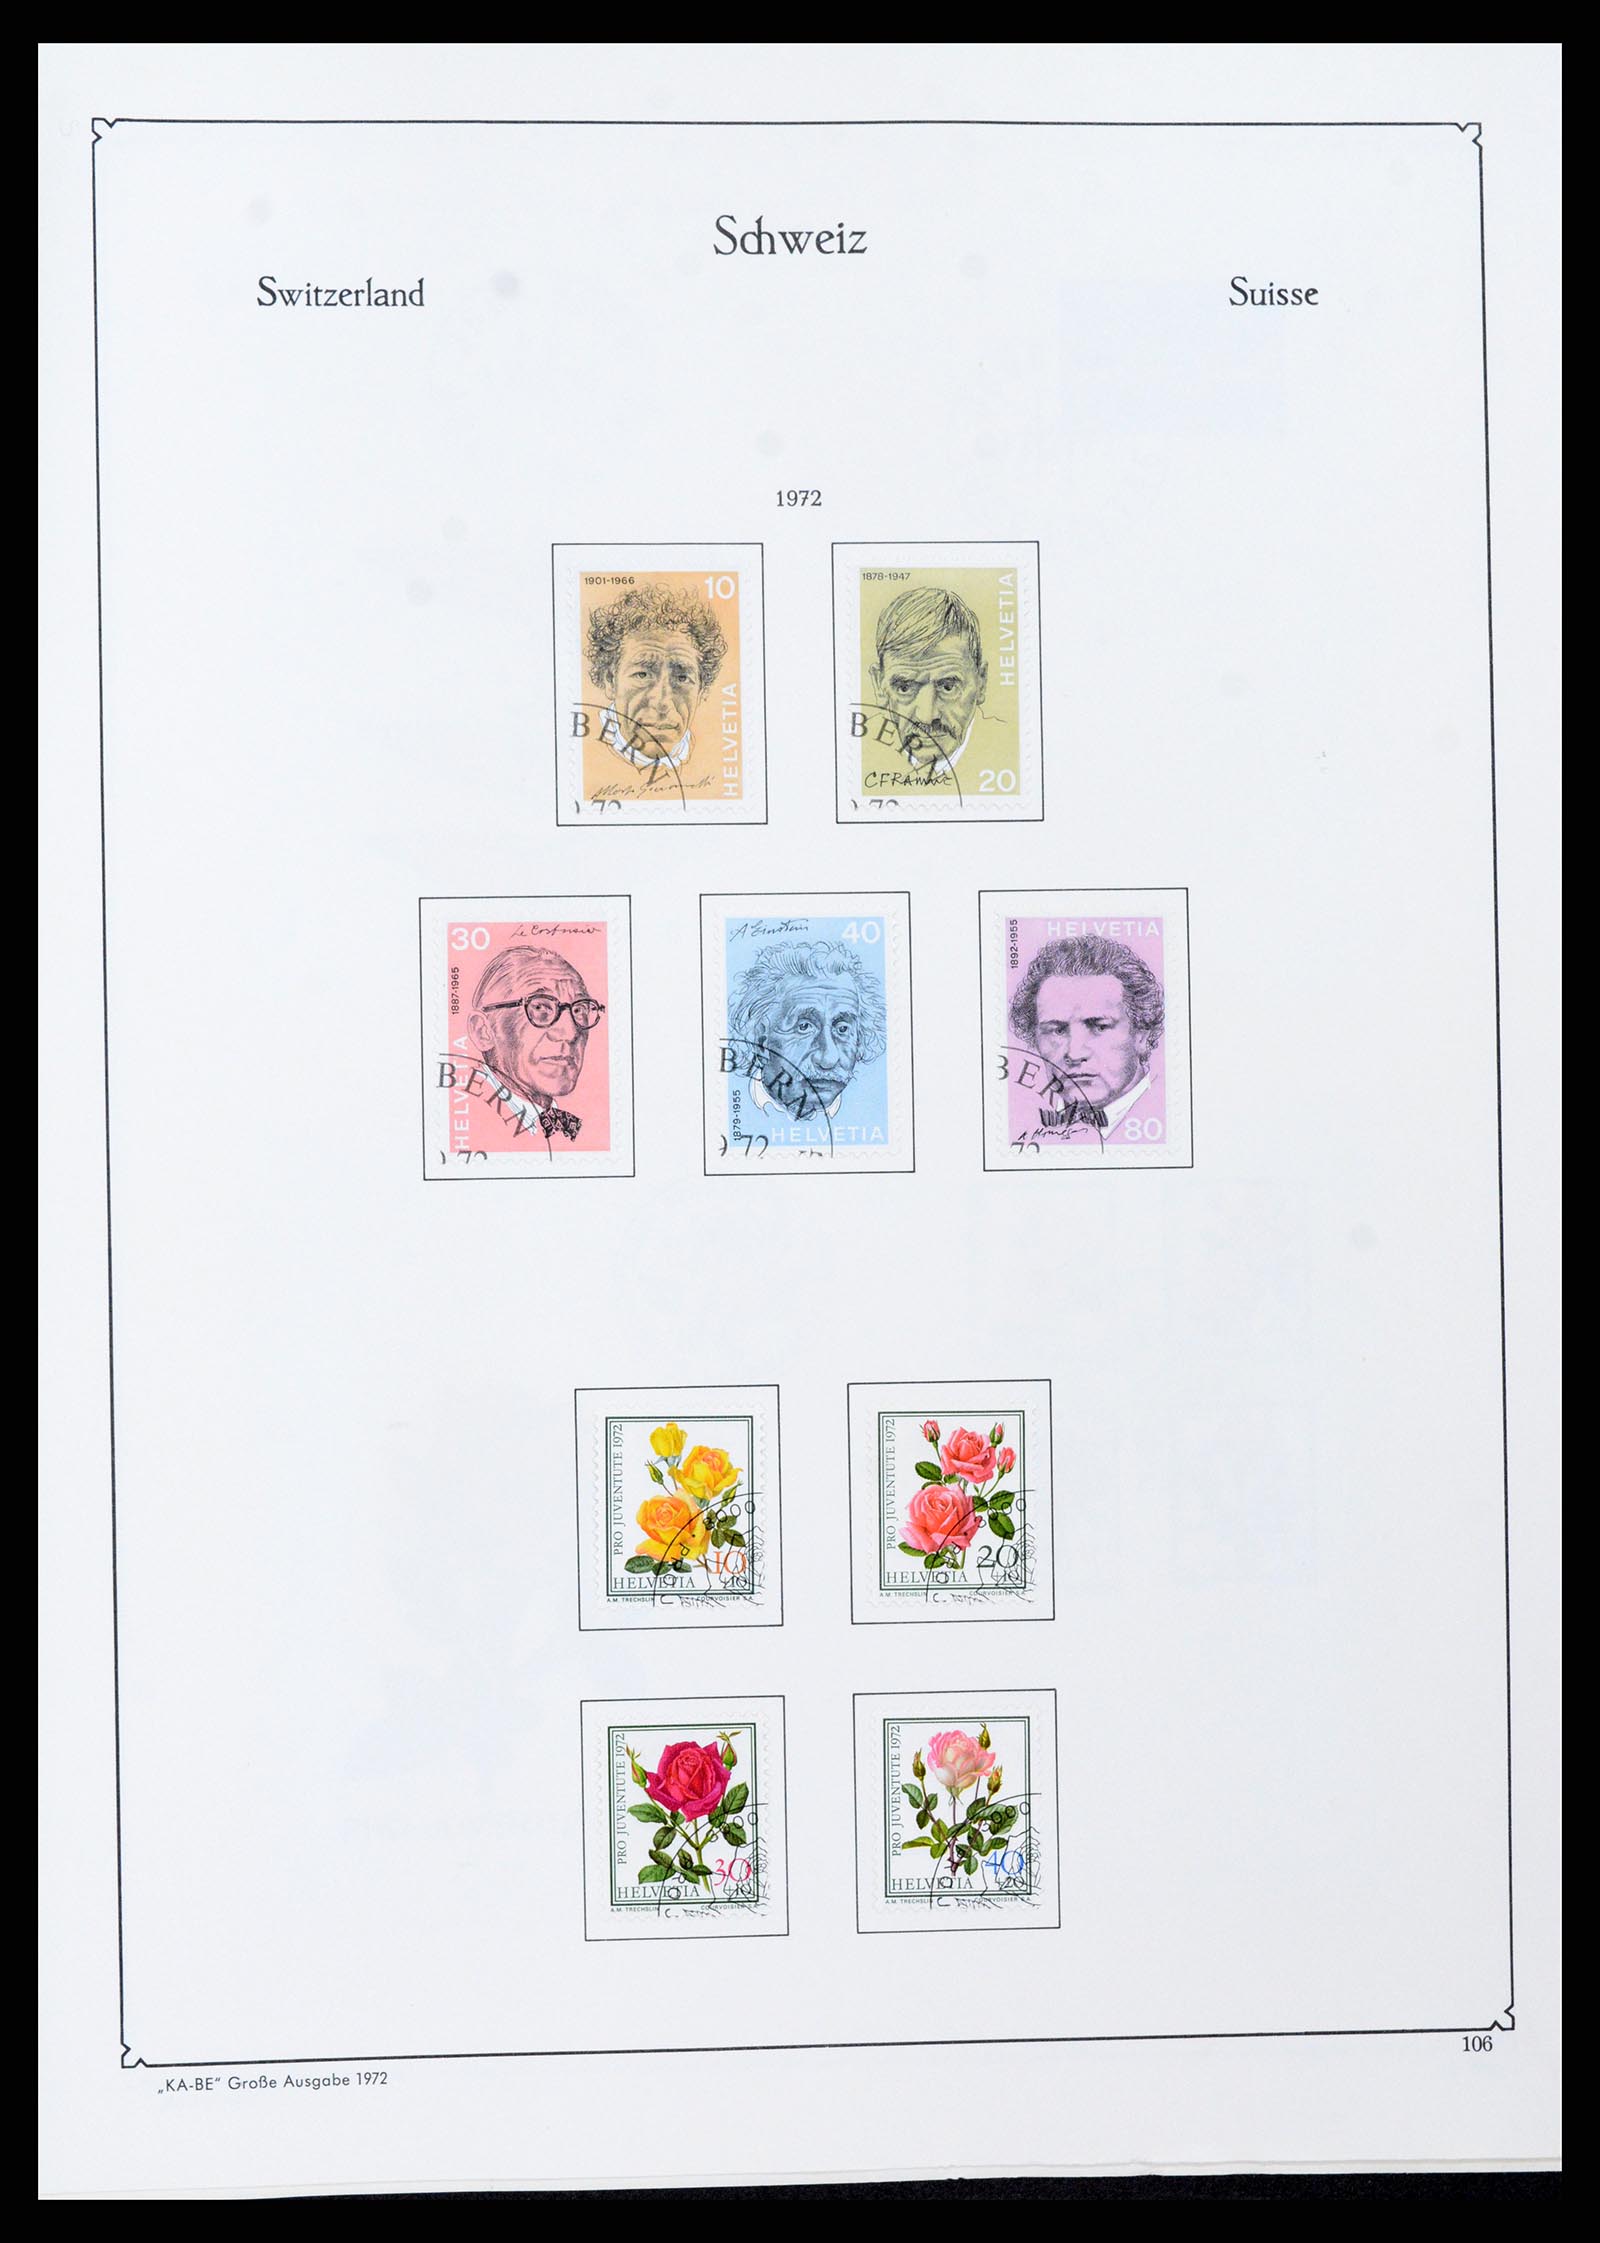 37588 107 - Stamp collection 37588 Switzerland 1854-1974.